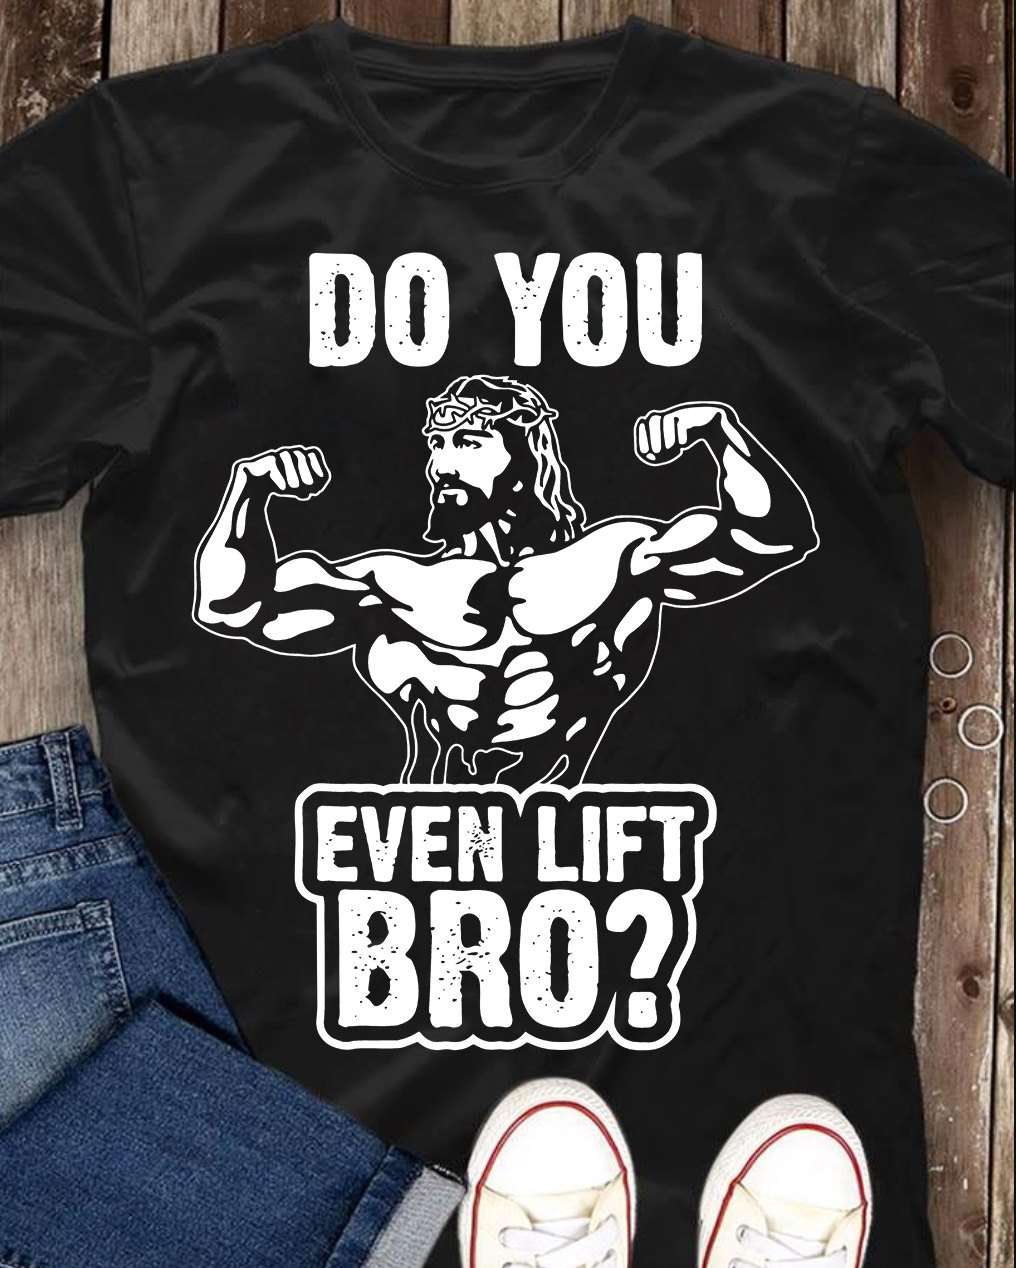 God Lift - Do you even lift bro?